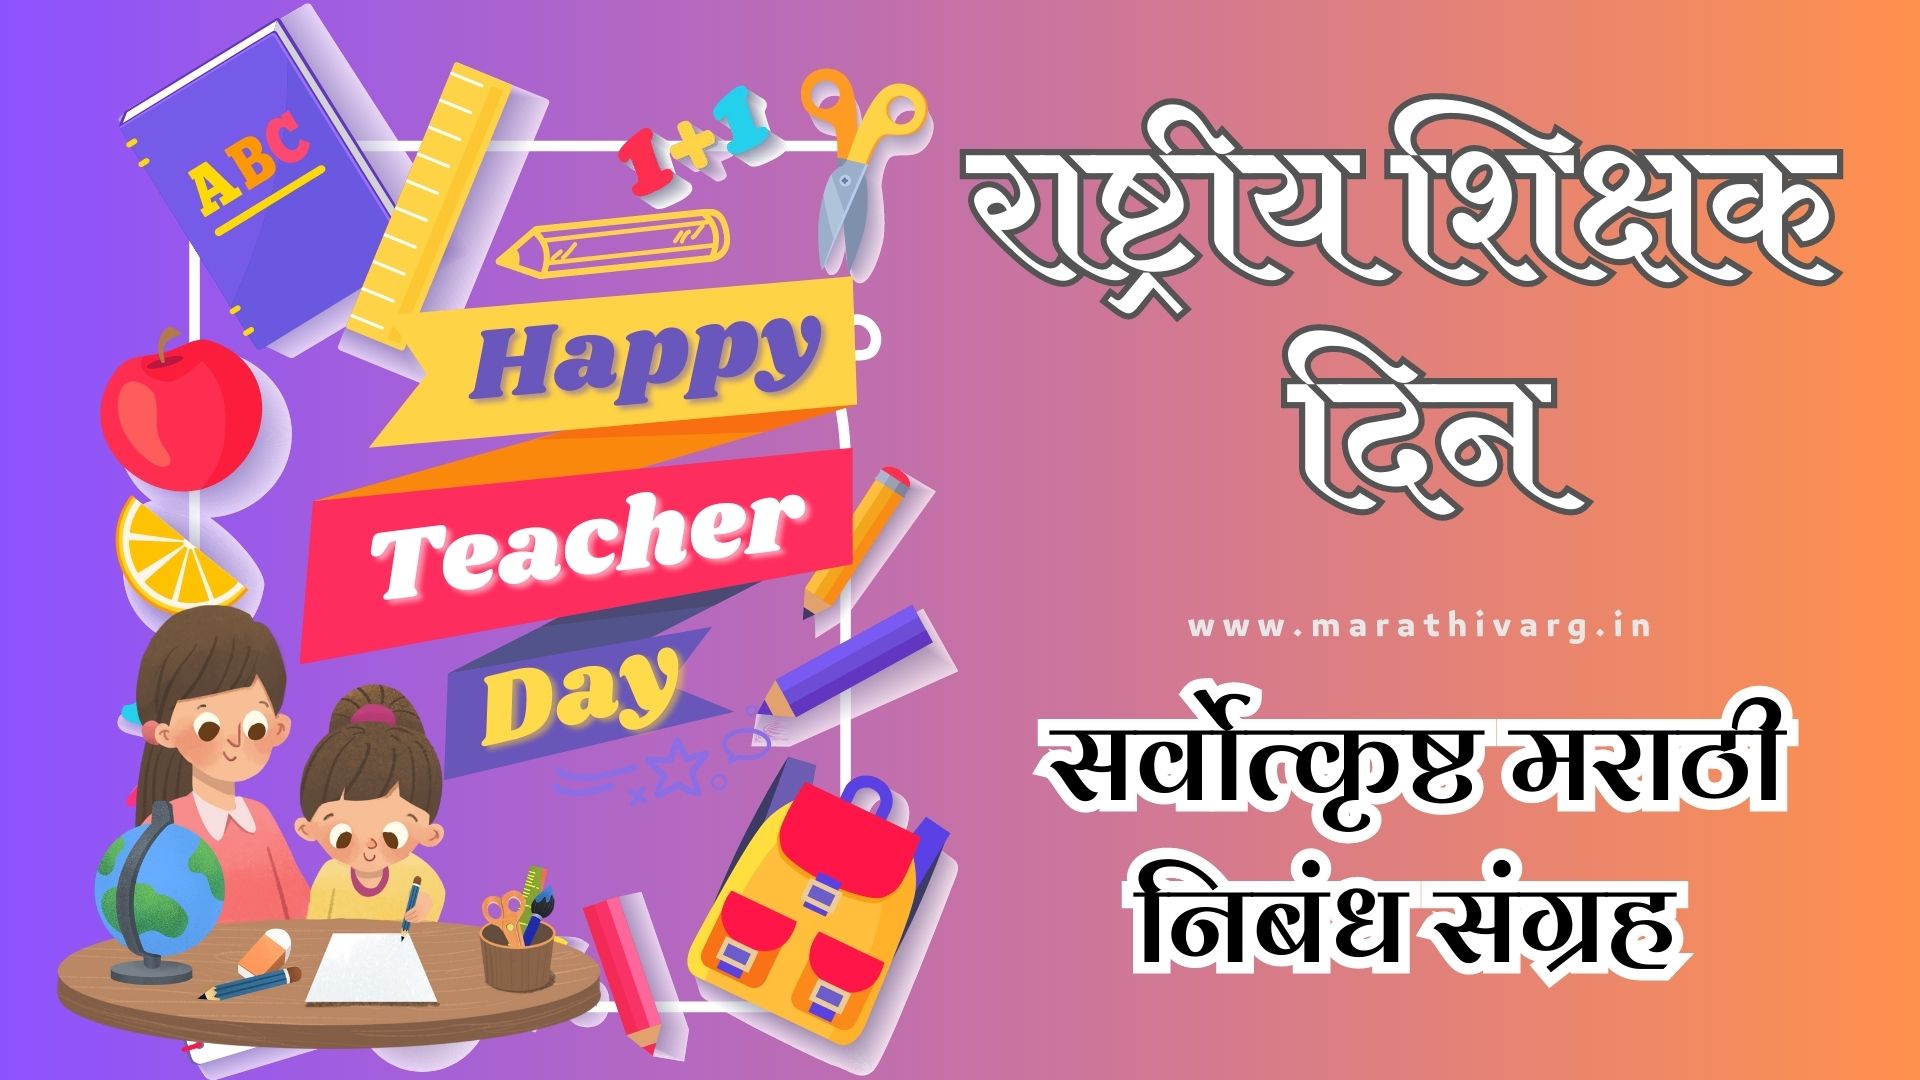 5 best marathi essay on teachers day